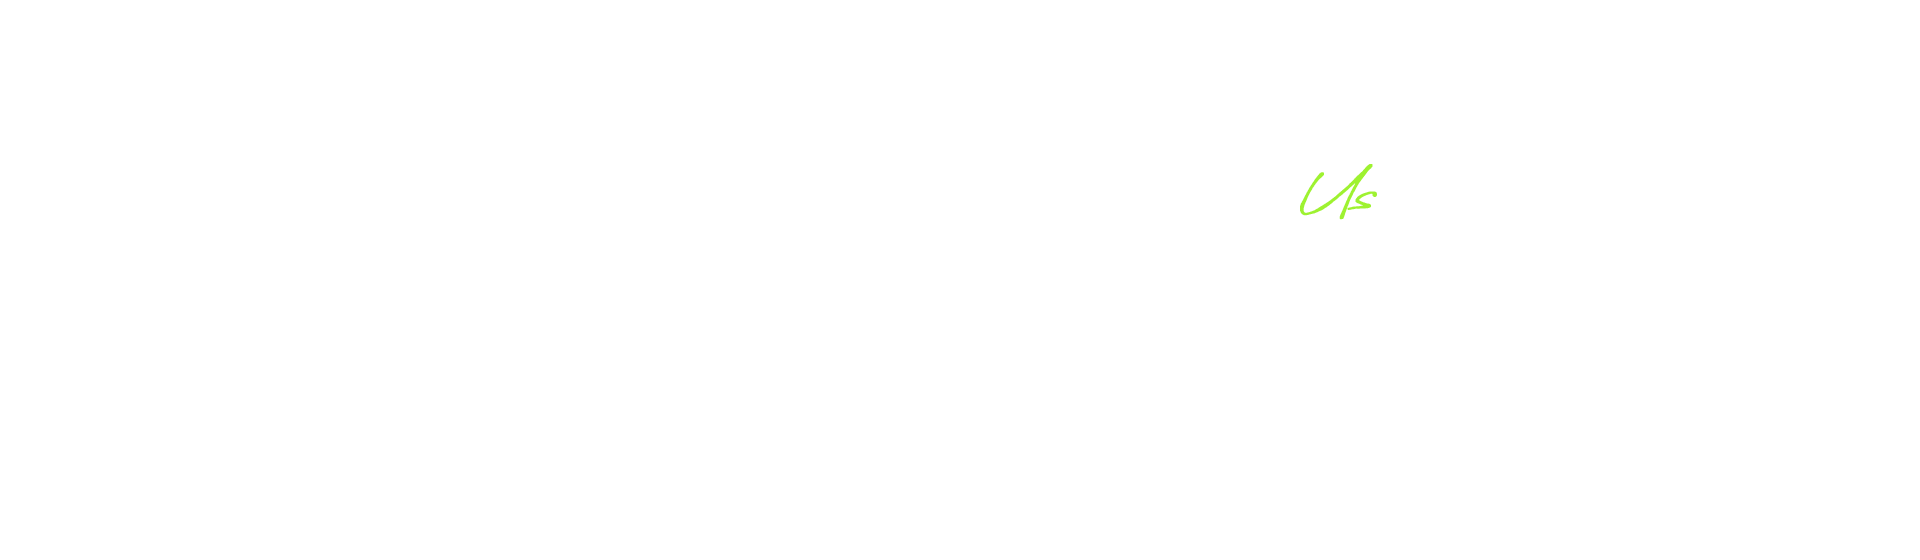 bnr_contact_upper